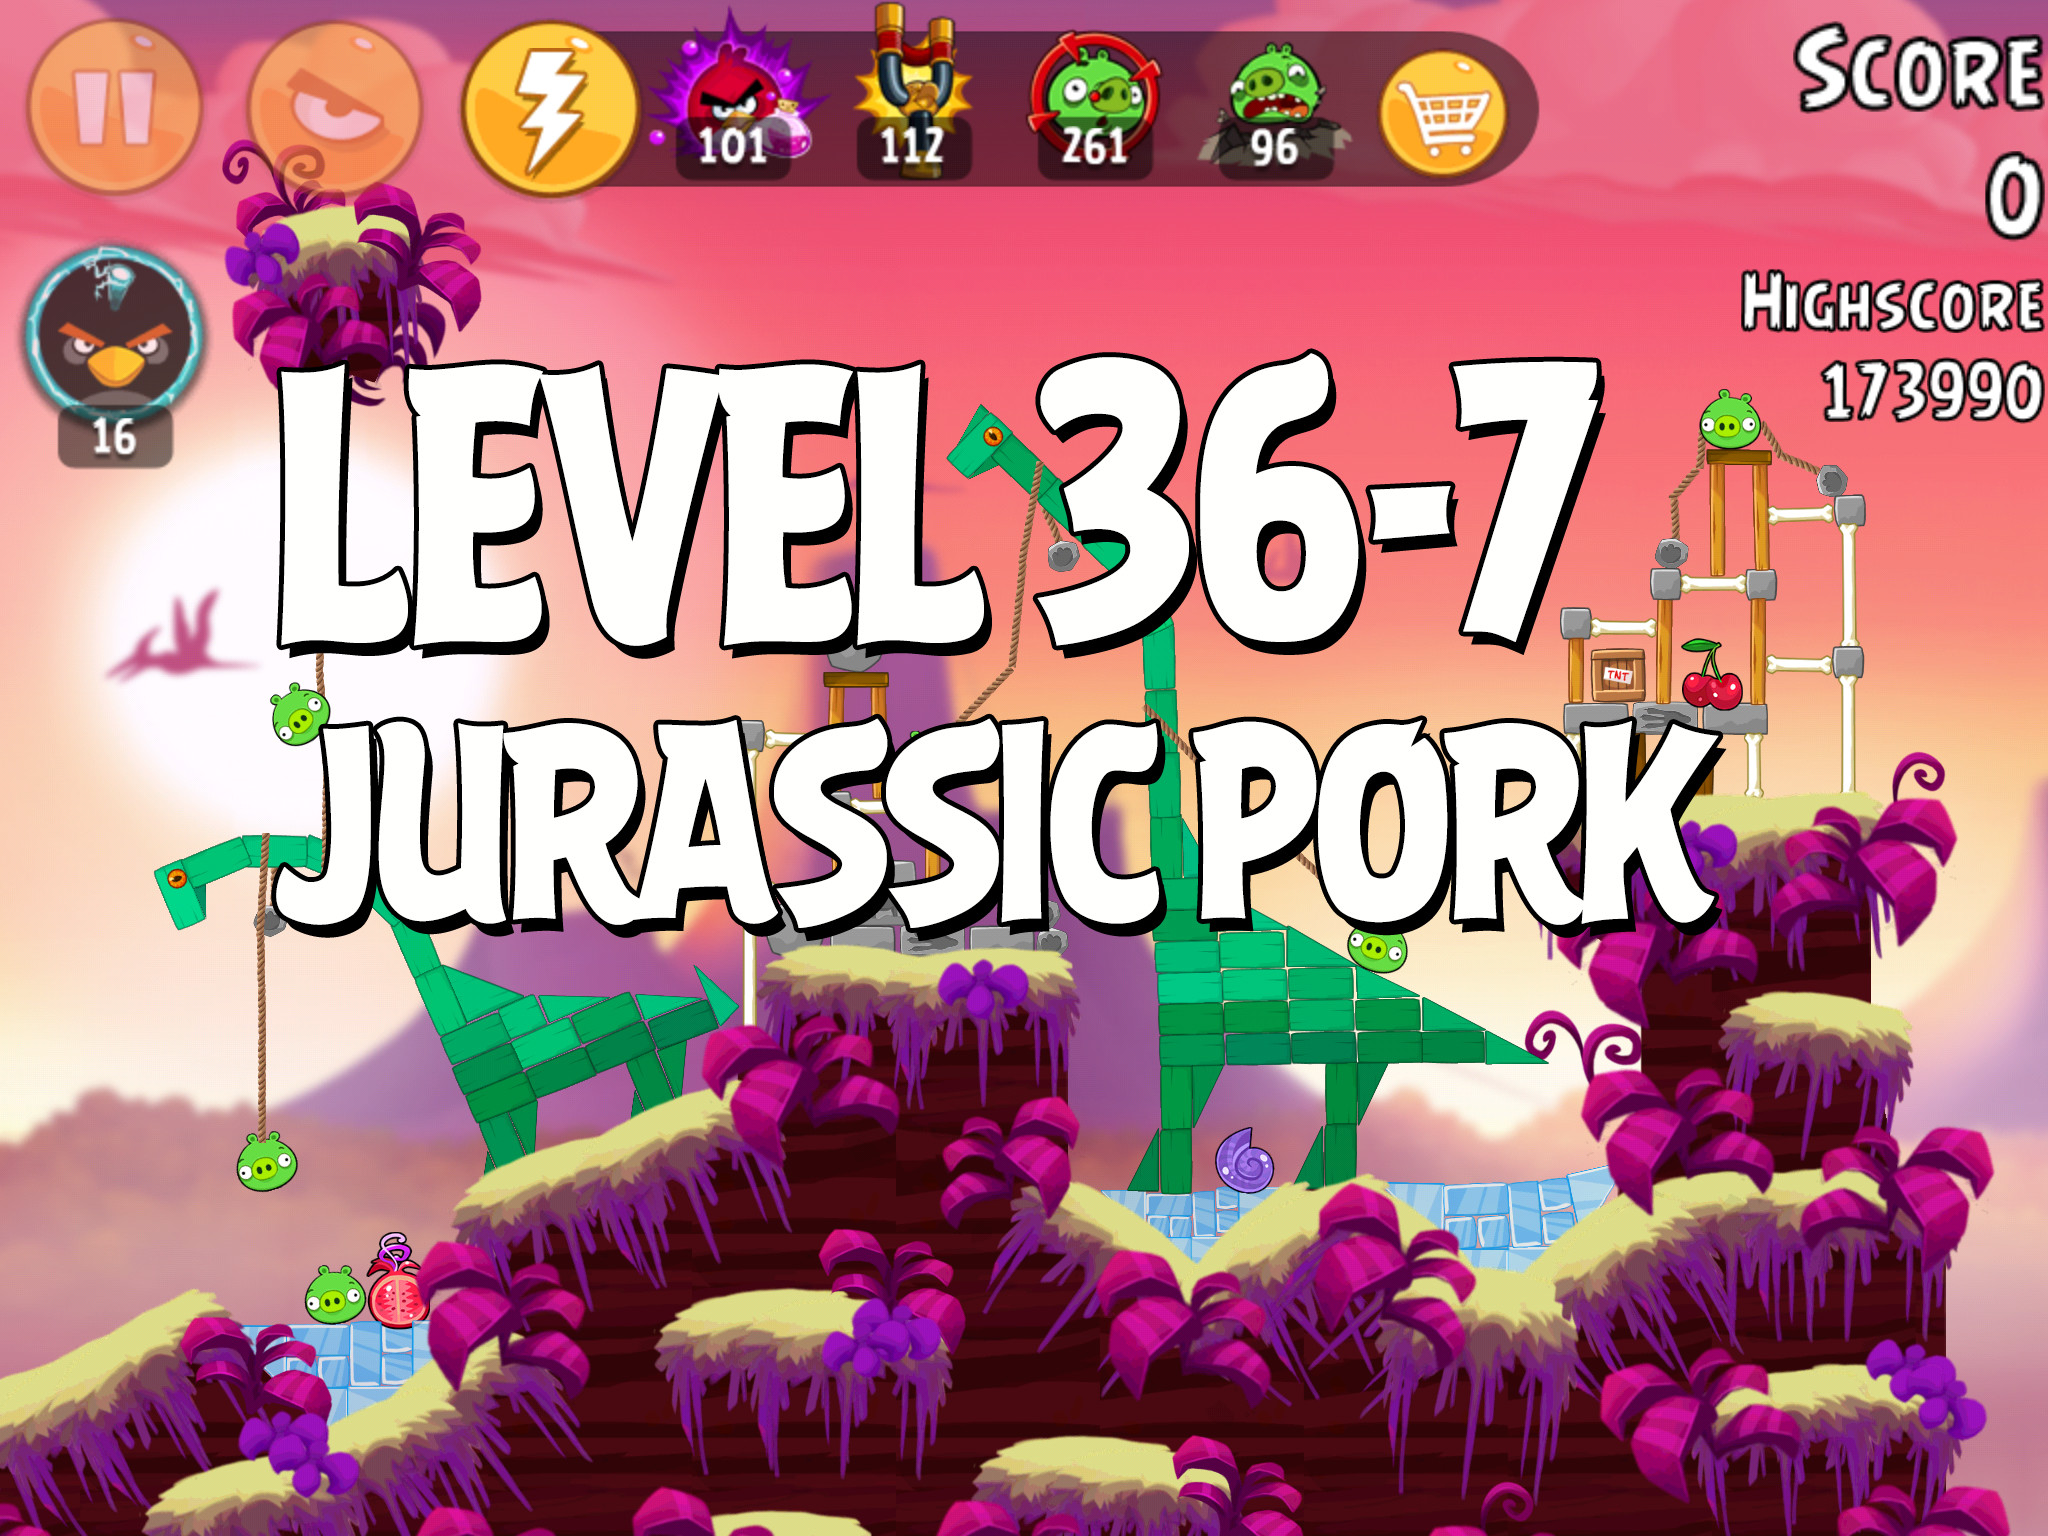 Angry-Birds-Jurassic-Pork-Level-36-7